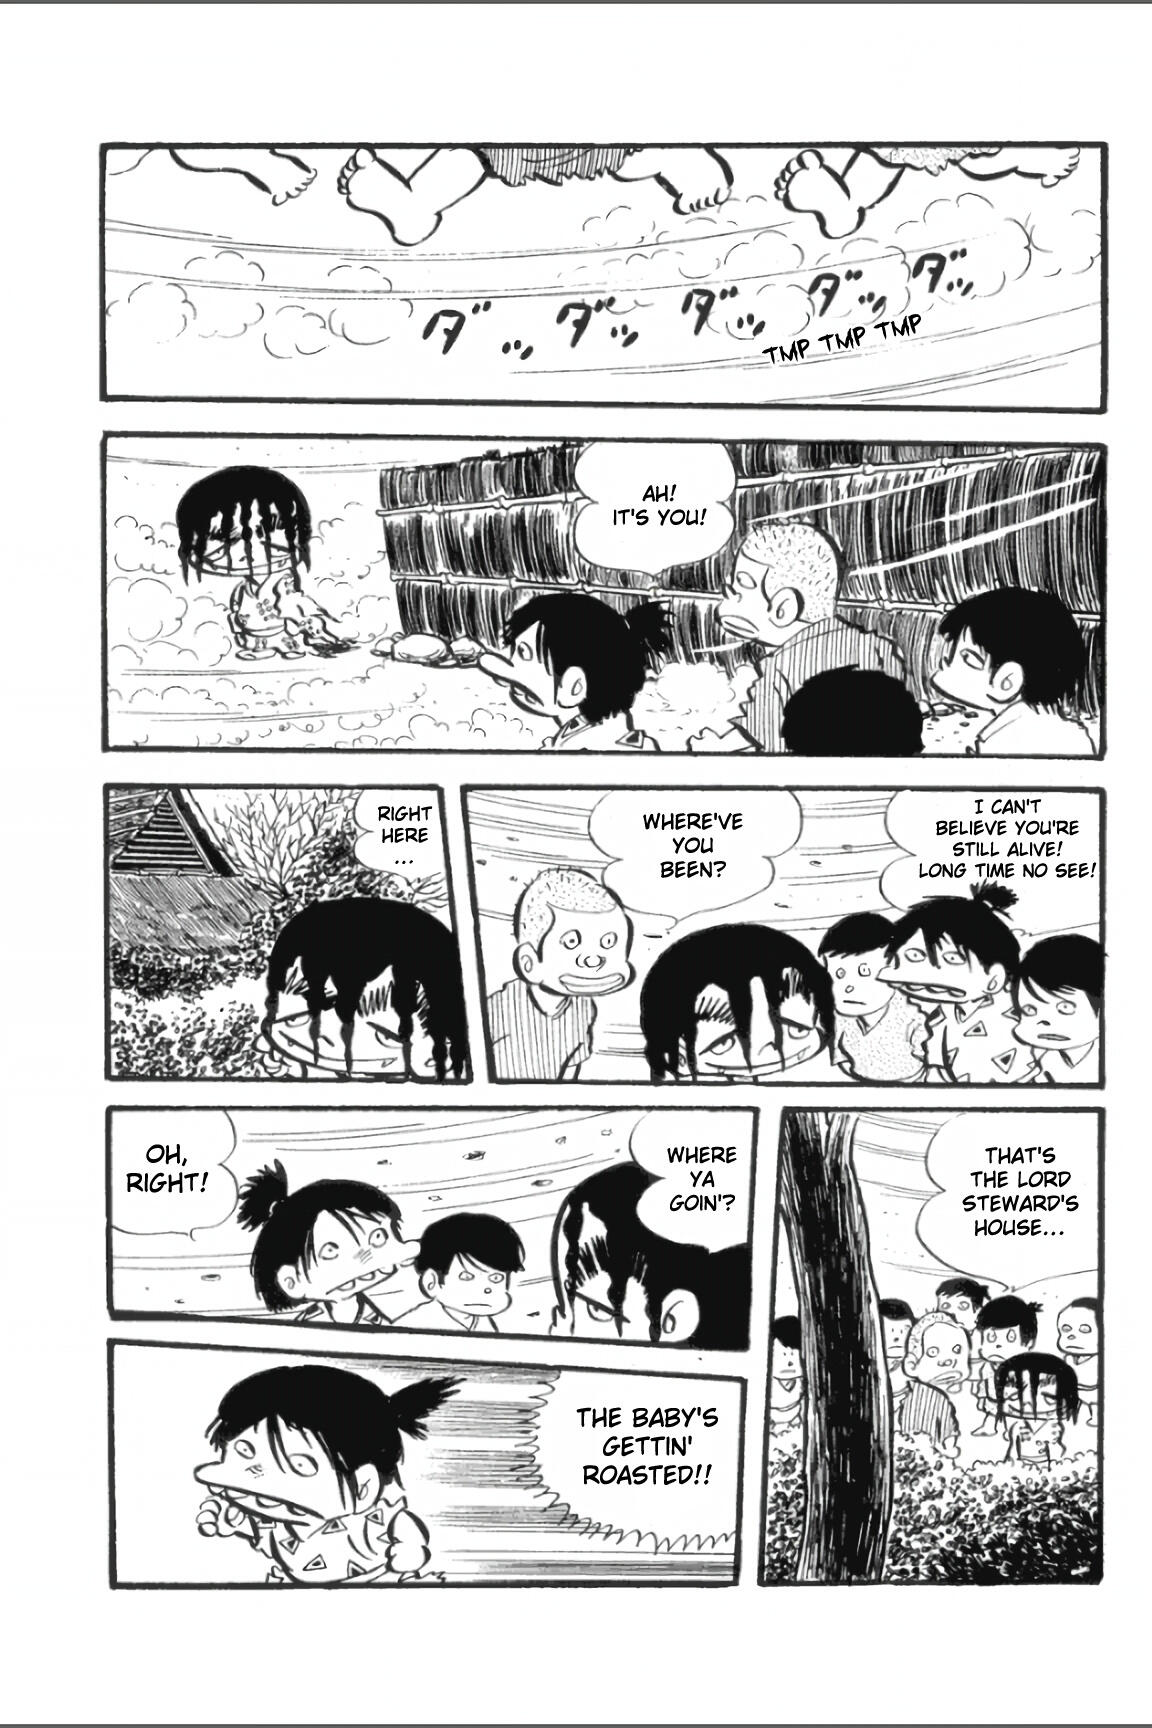 Read Kyoto & Wagashi & Family Manga on Mangakakalot